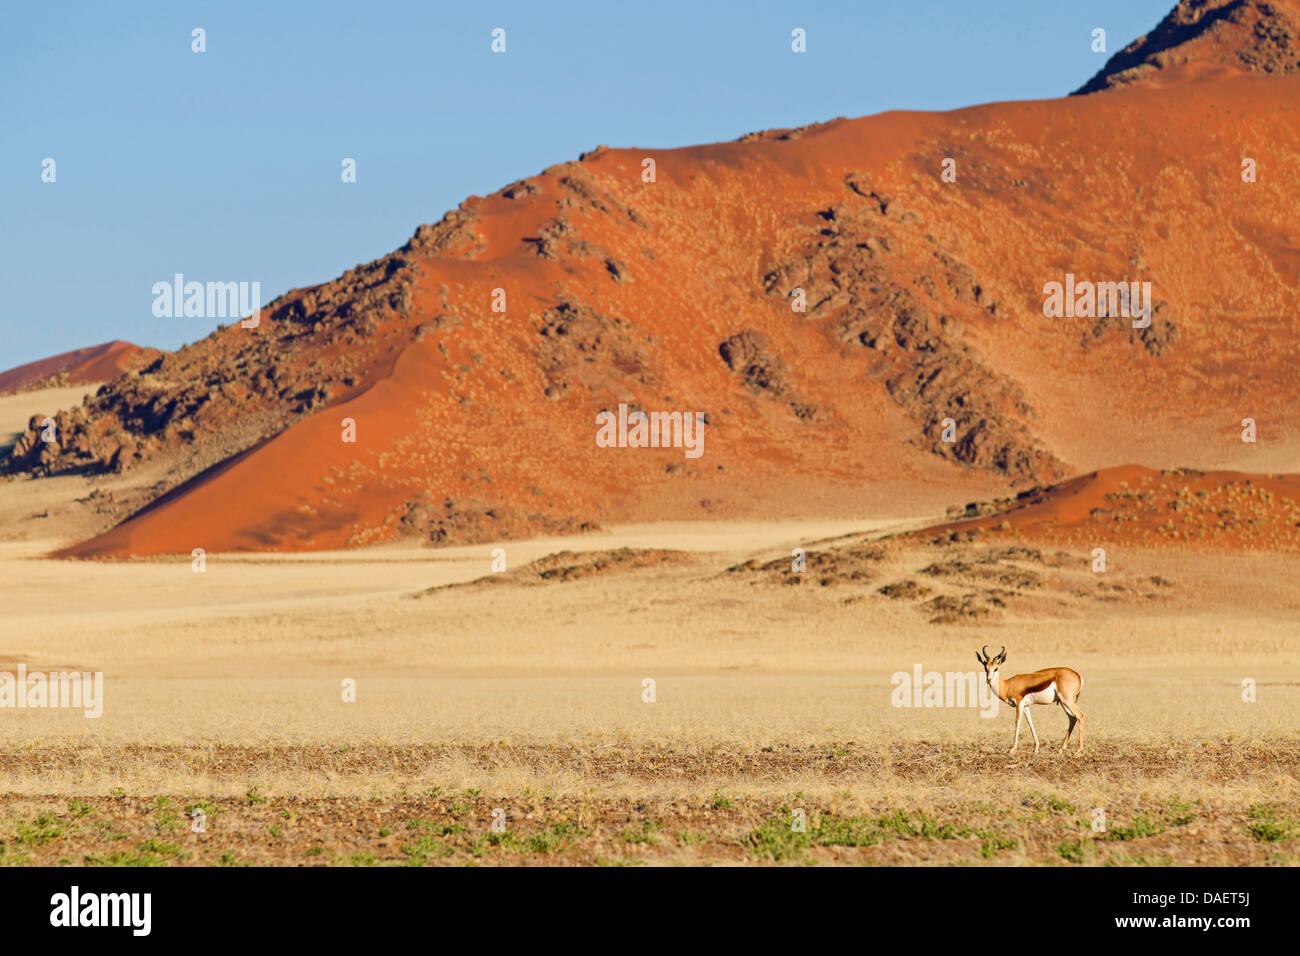 Springbuck, springbok (Antidorcas marsupialis), in piedi nel deserto nella parte anteriore di una duna, Namibia, Hardap, Namib Naukluft National Park, Sesriem Foto Stock